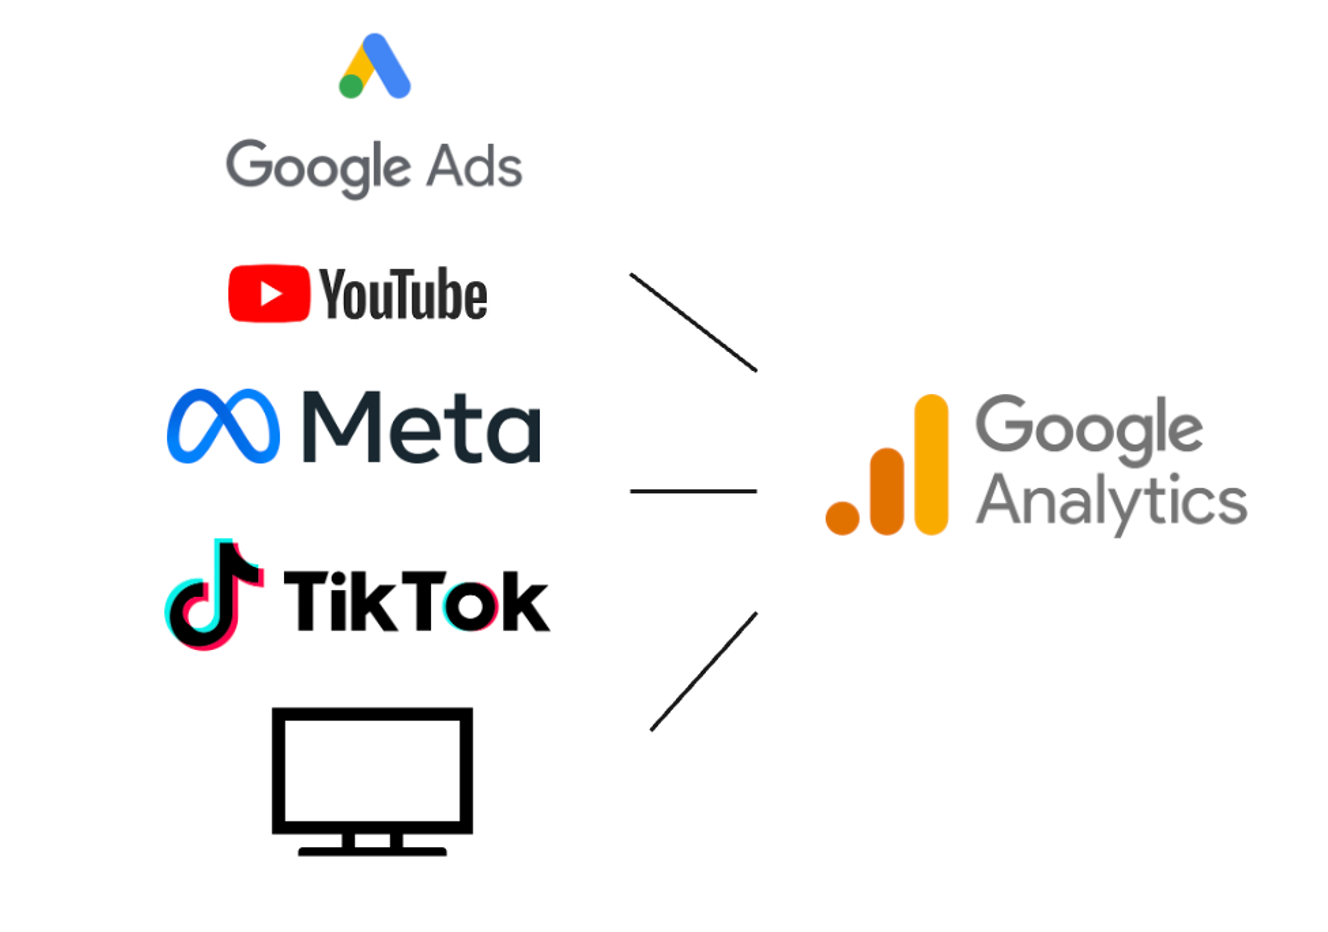 Media data linking to Google Analytics